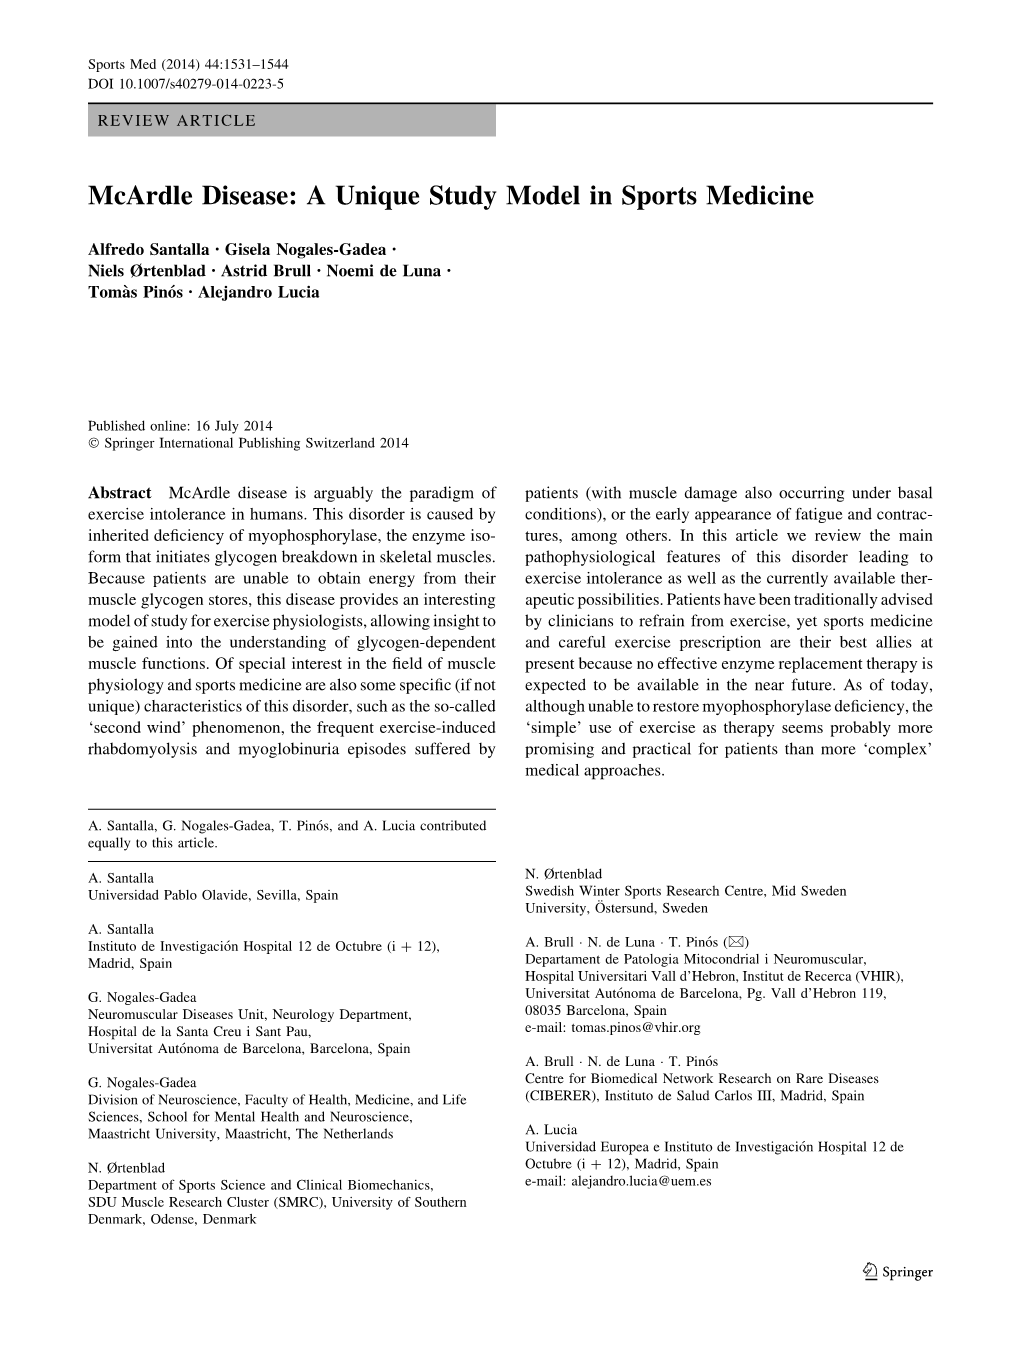 Mcardle Disease: a Unique Study Model in Sports Medicine